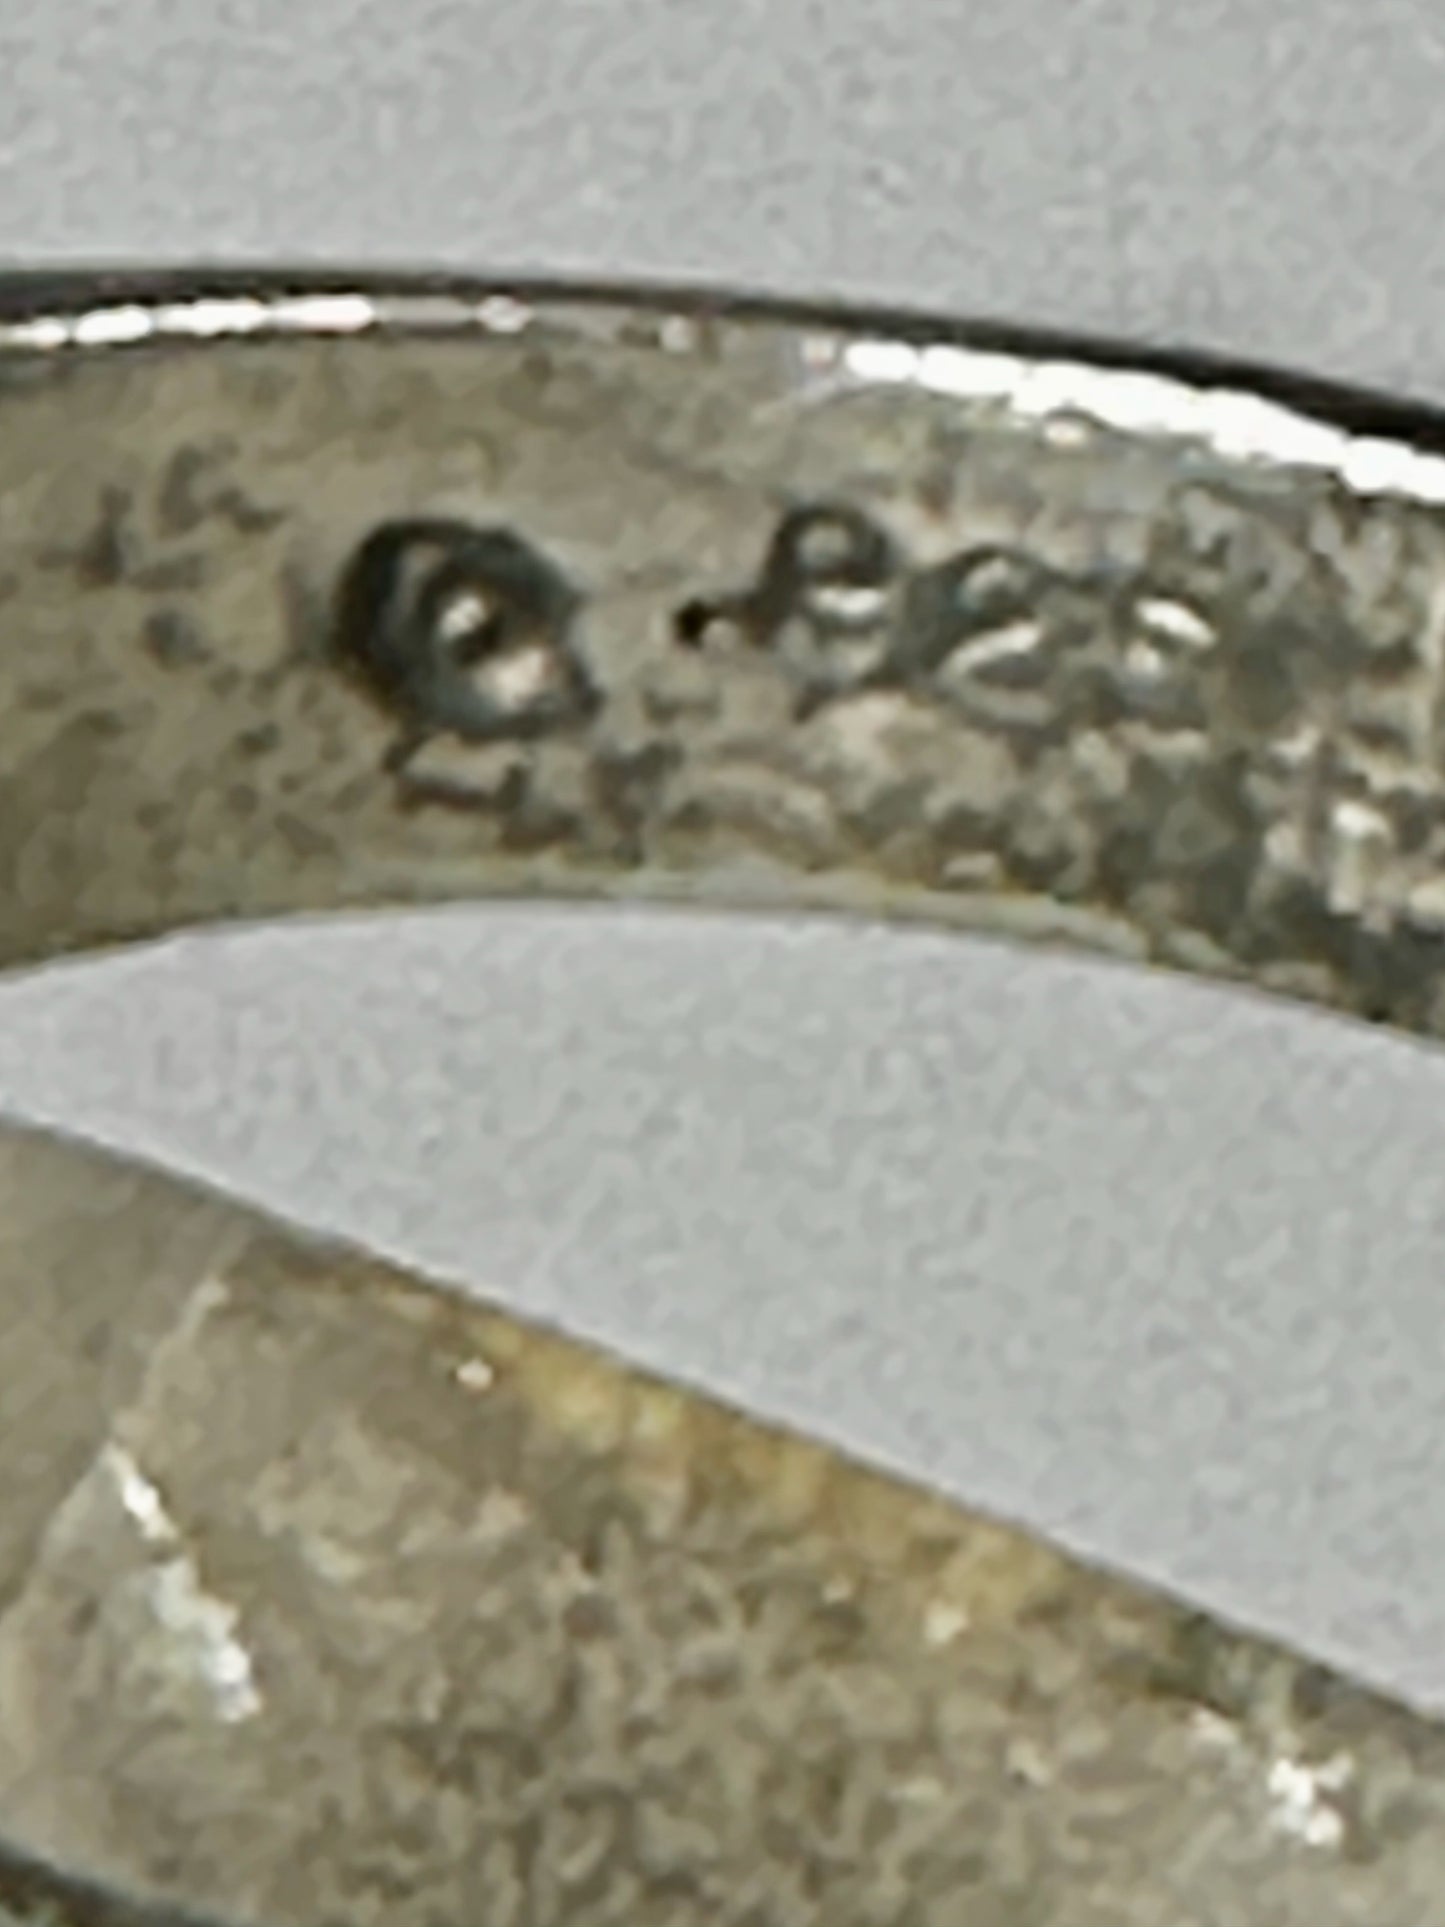 Black Hills Gold ring size 11.75 leaves sterling silver band women men